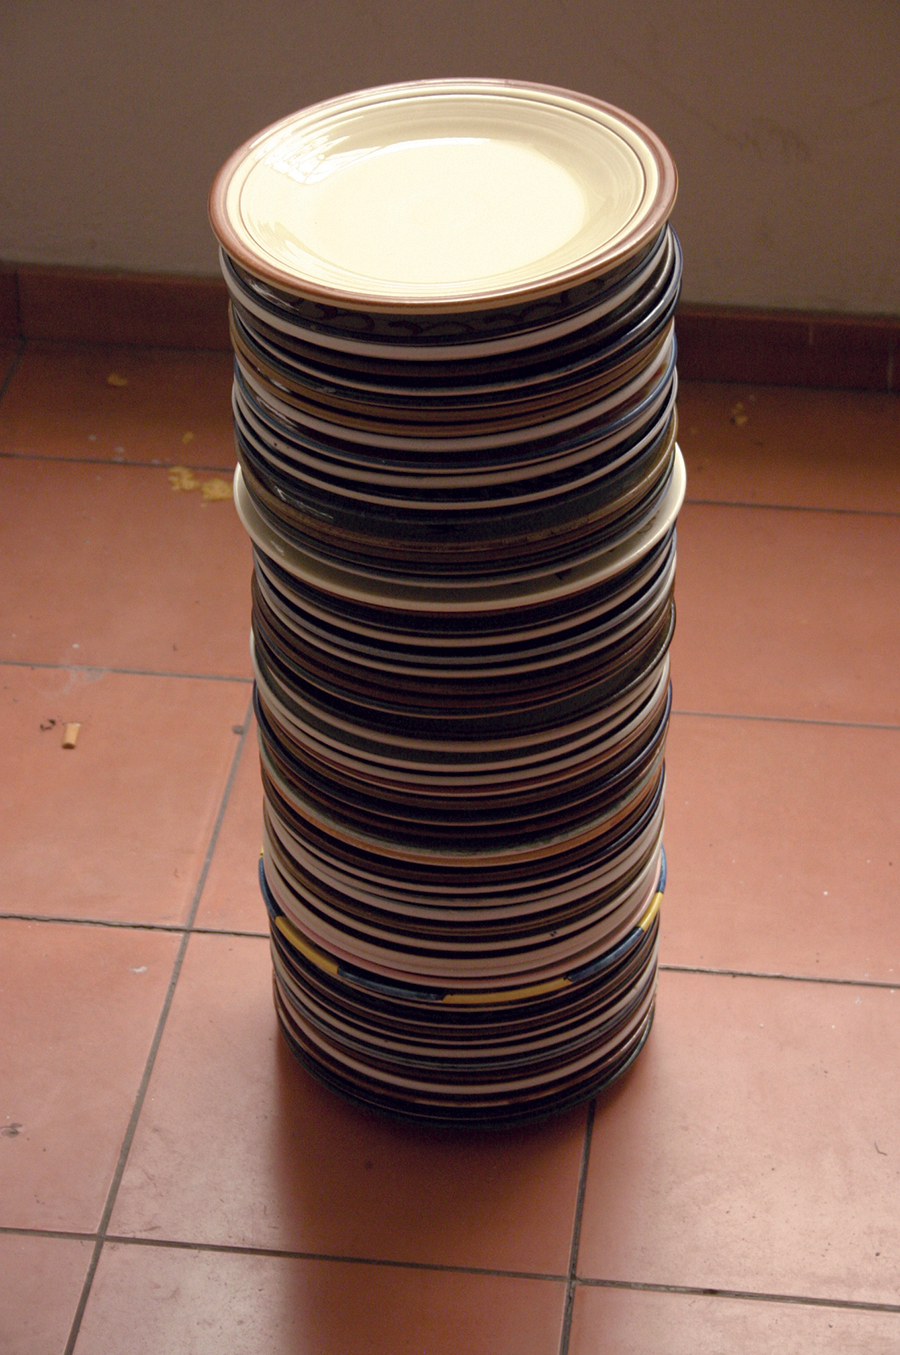 C.A.C.A., ”Estrategia”, platos de cerámica, mesa y silla de madera, medidas variables, 2004